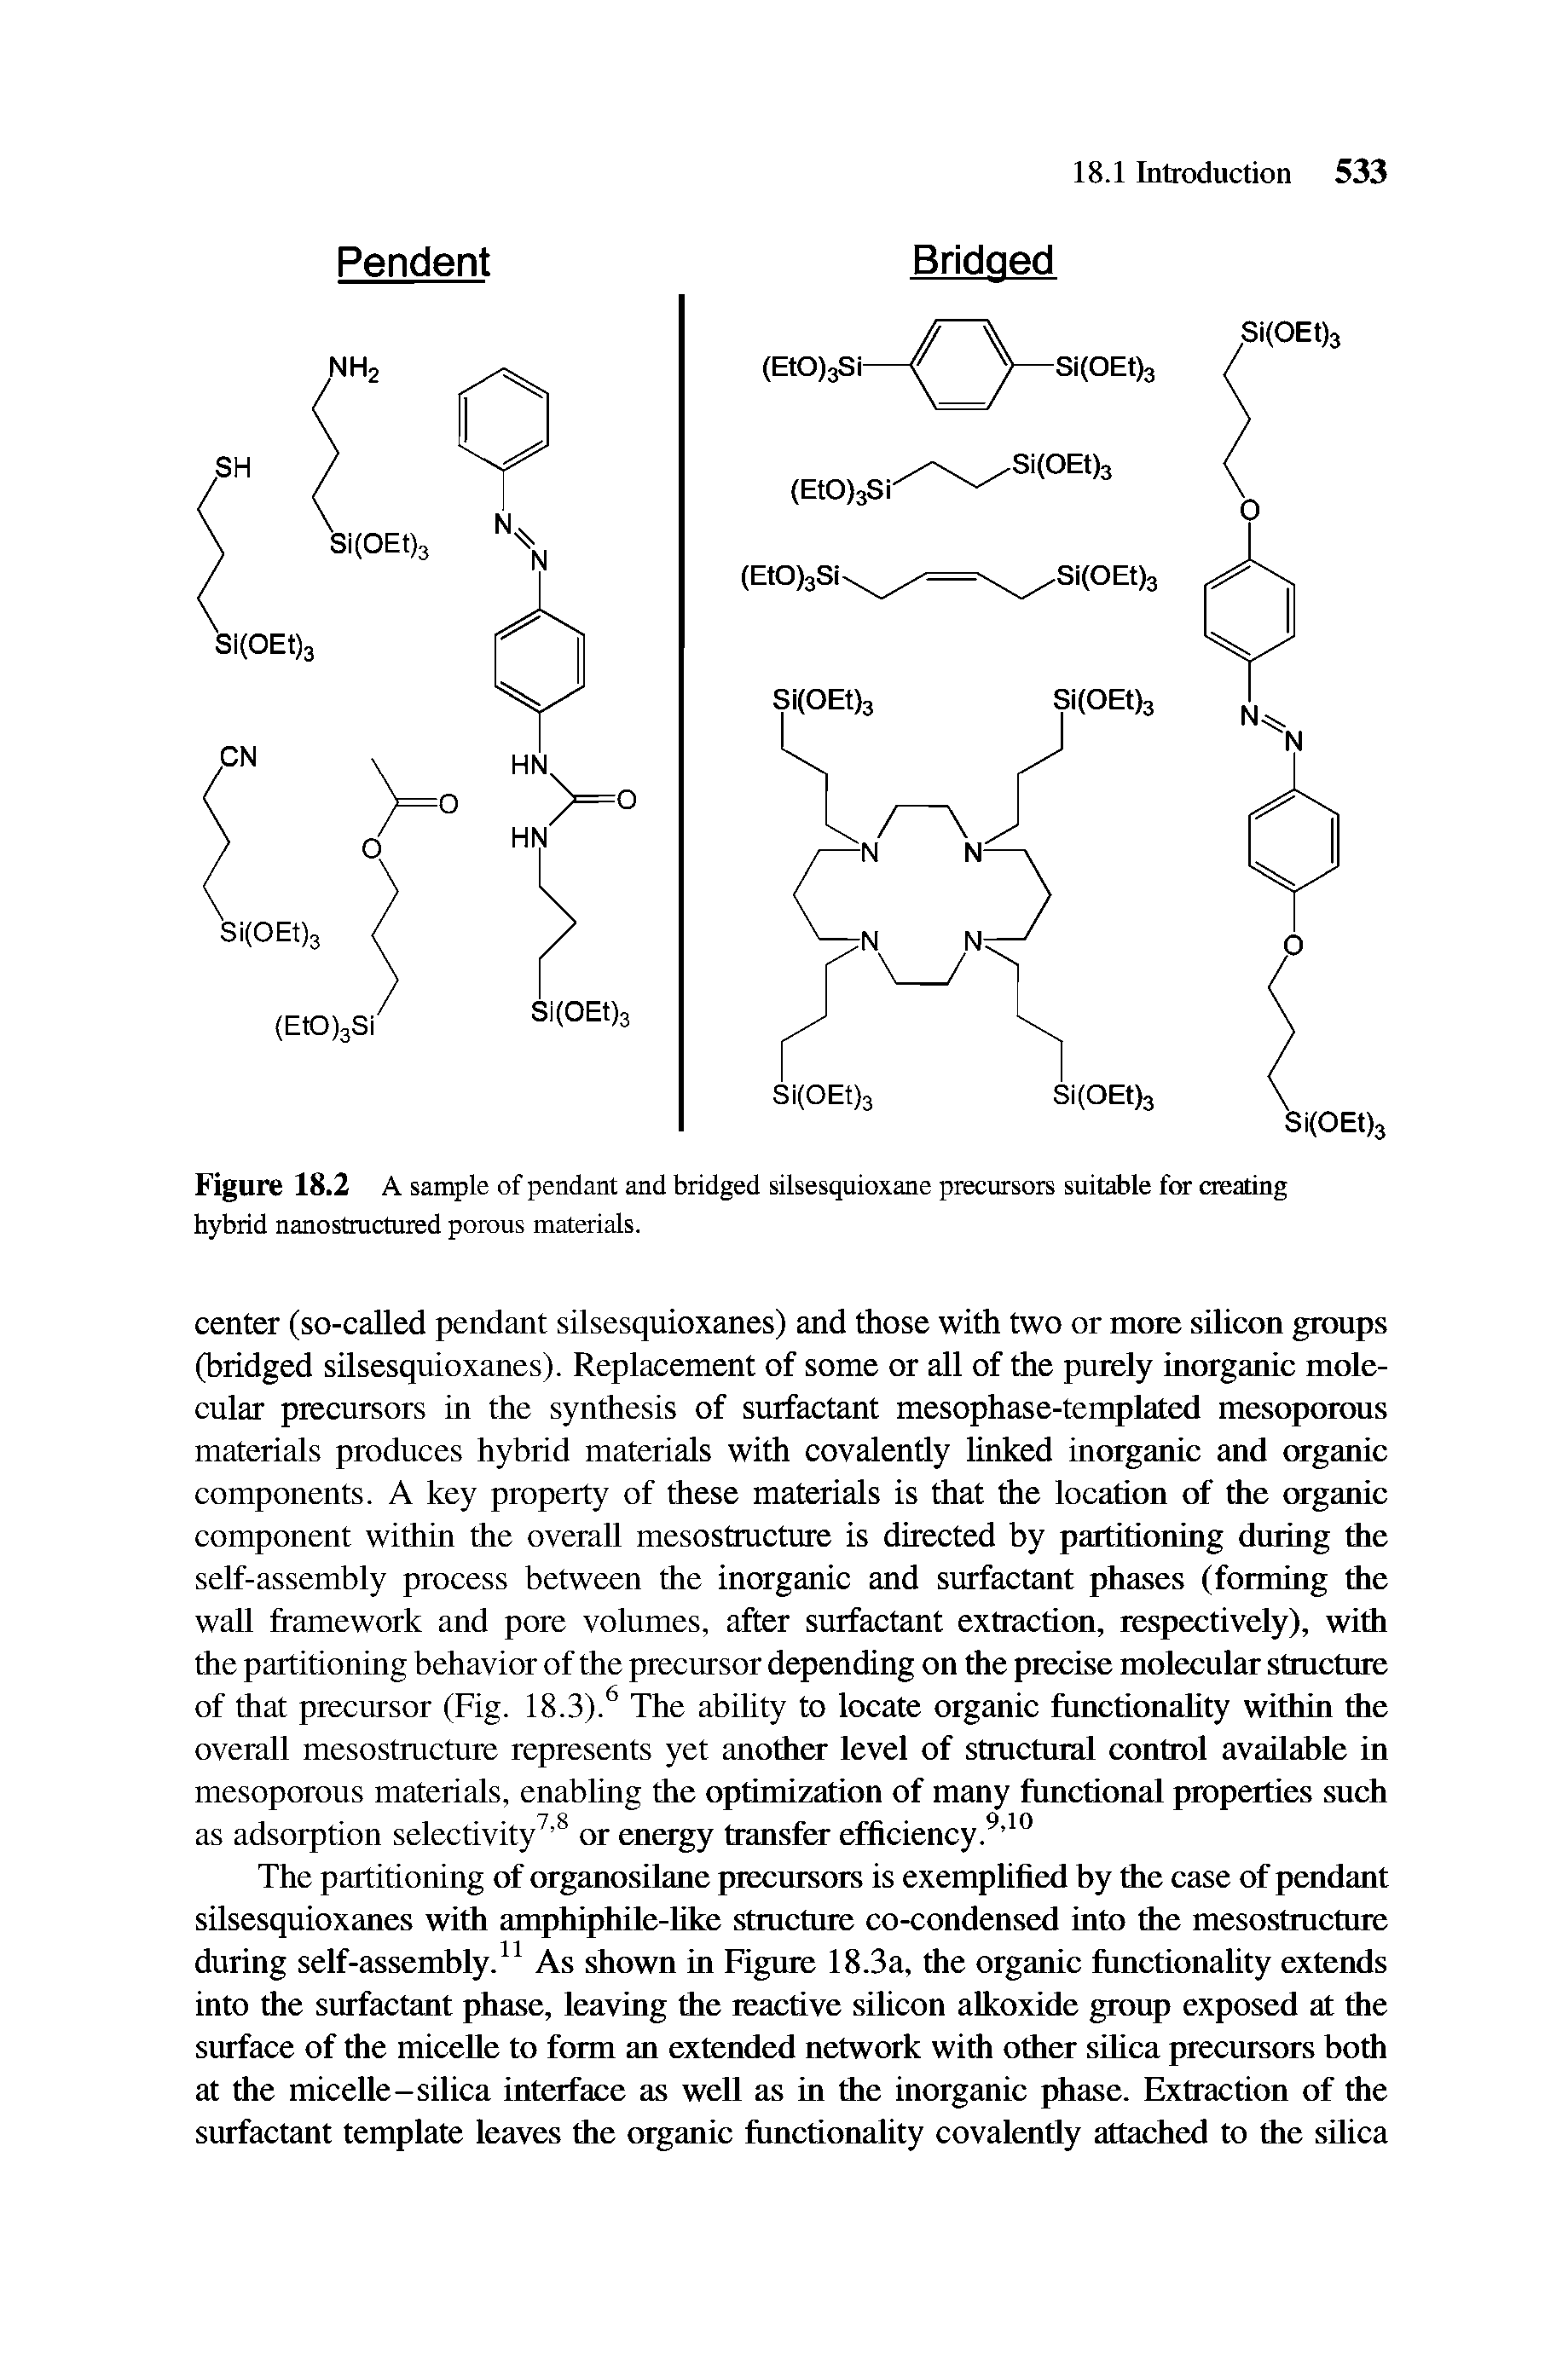 Figure 18.2 A sample of pendant and bridged silsesquioxane precursors suitable for creating hybrid nanostructured porous materials.